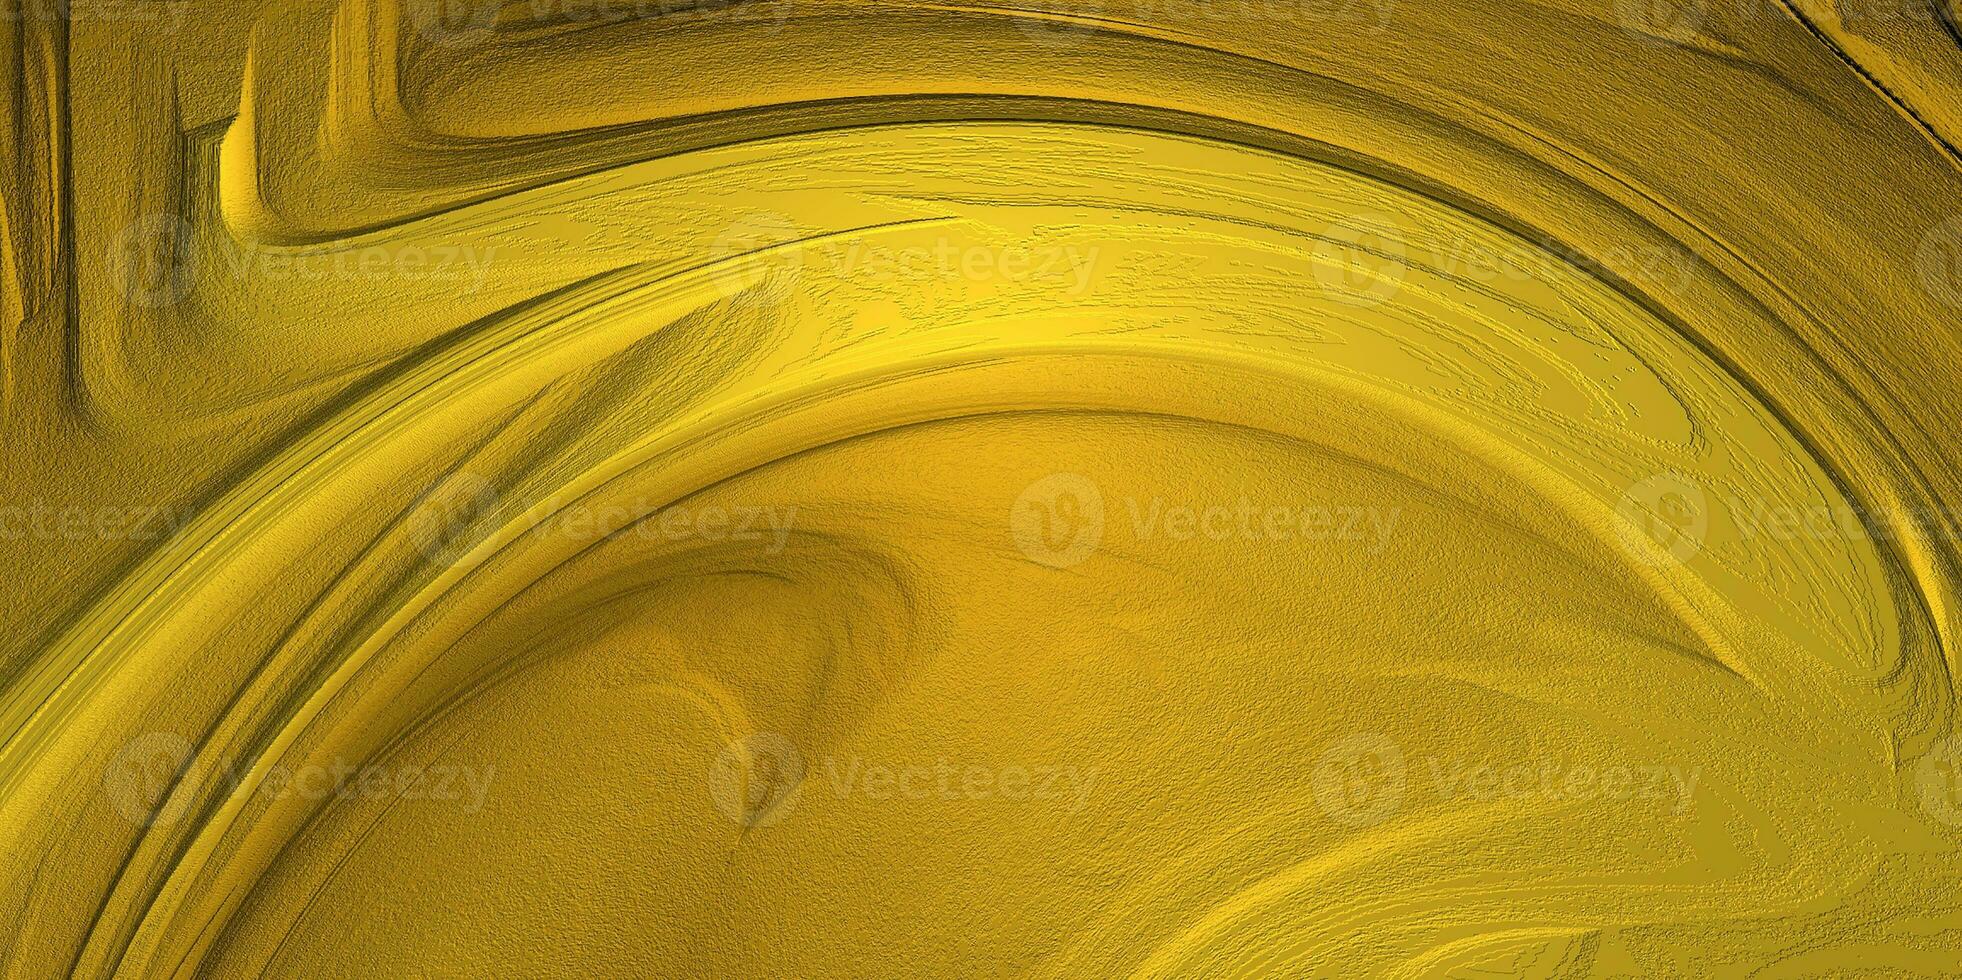 fundo abstrato de alta qualidade de textura de parede amarela e laranja foto